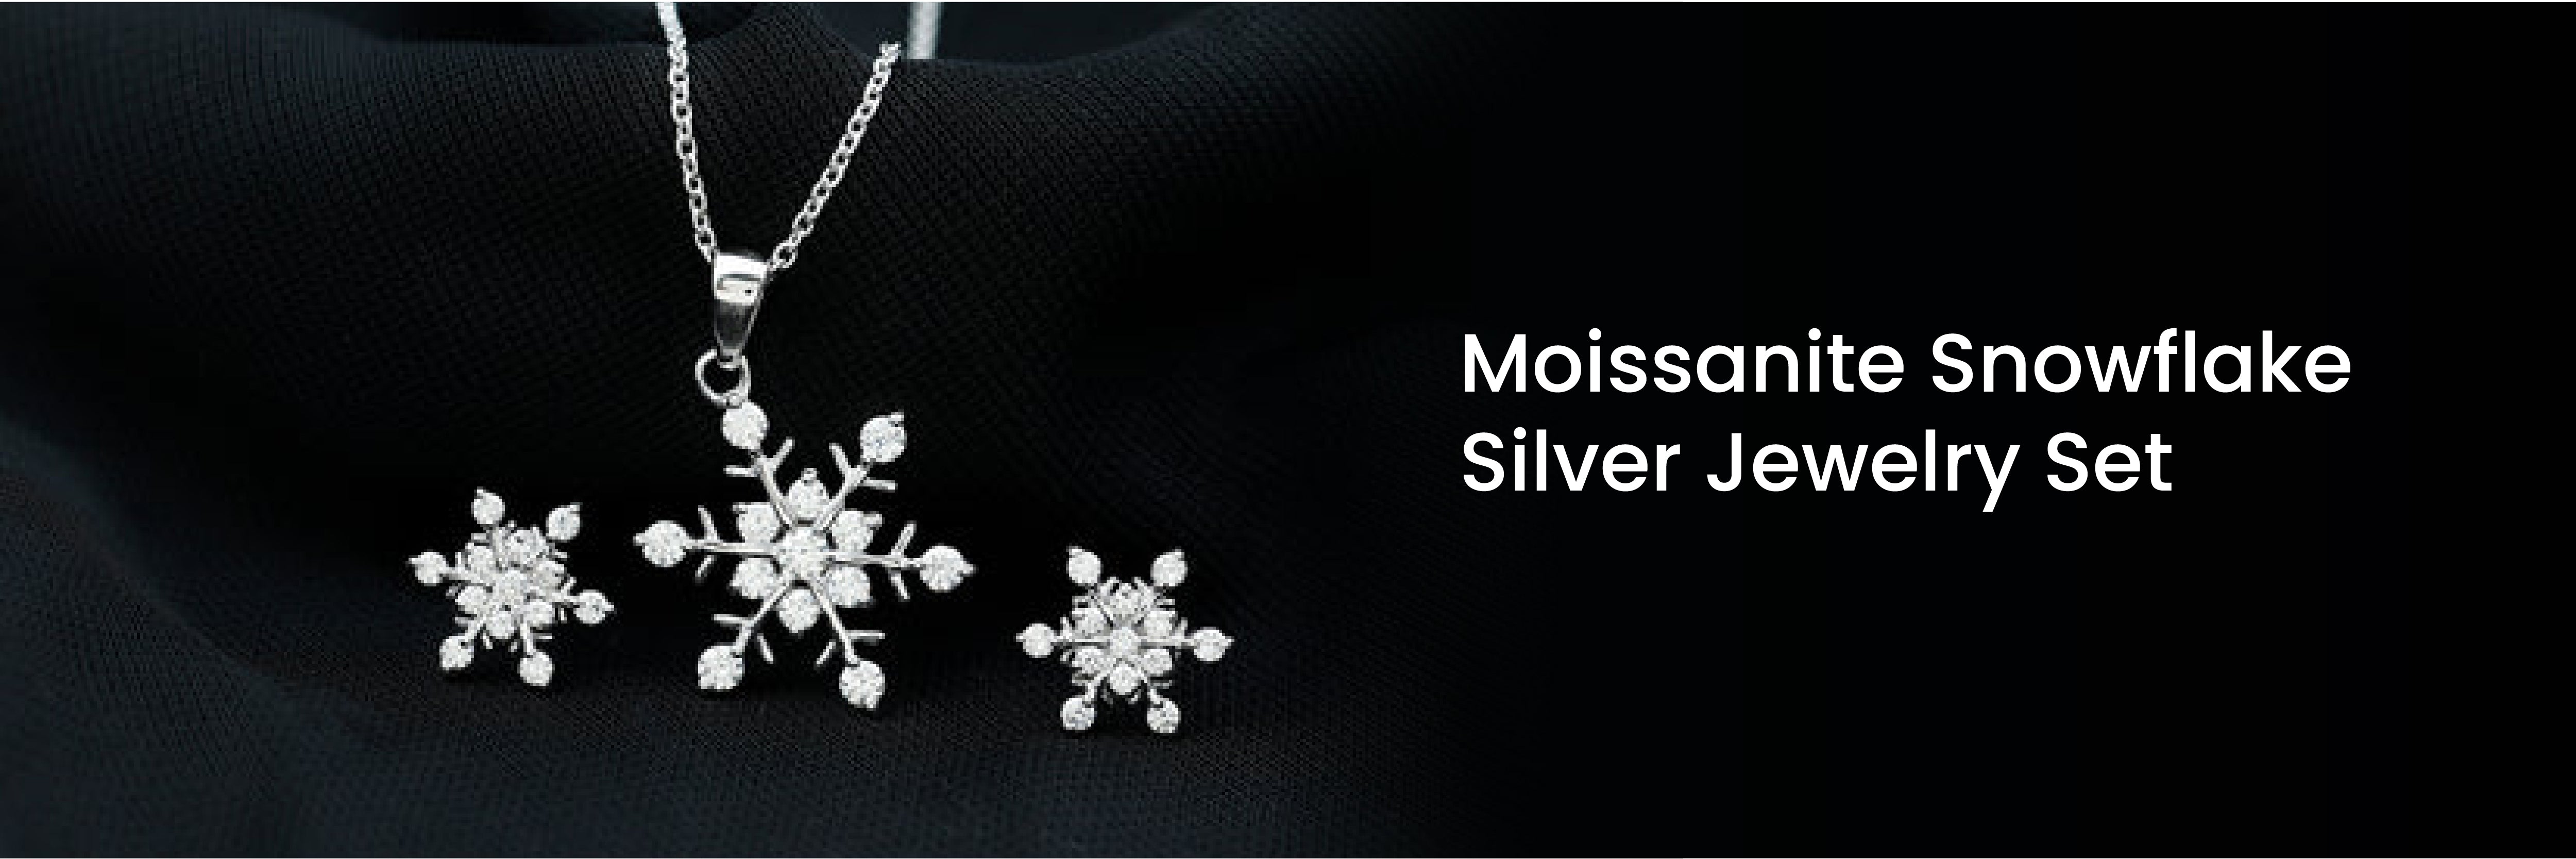 Moissanite Snowflake Silver Jewelry Set